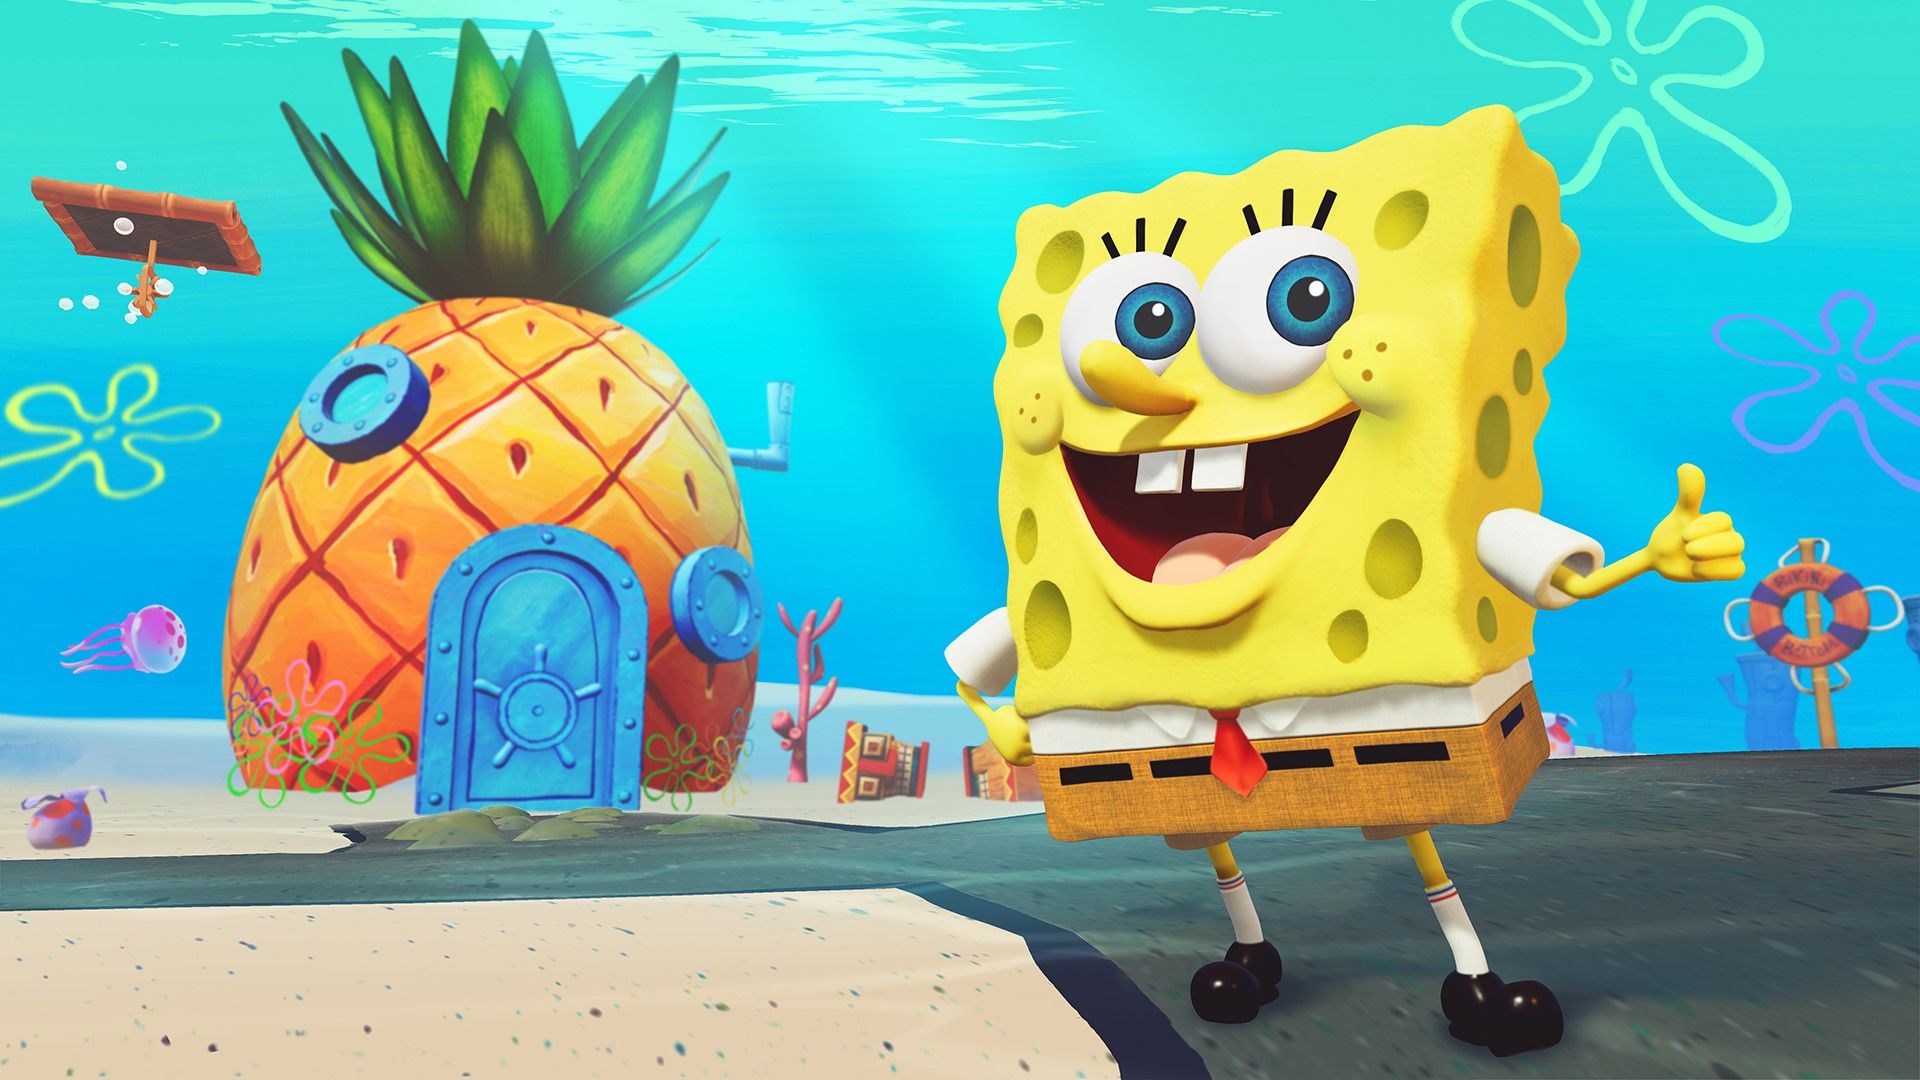 SpongeBob SquarePants: Battle for Bikini Bottom first